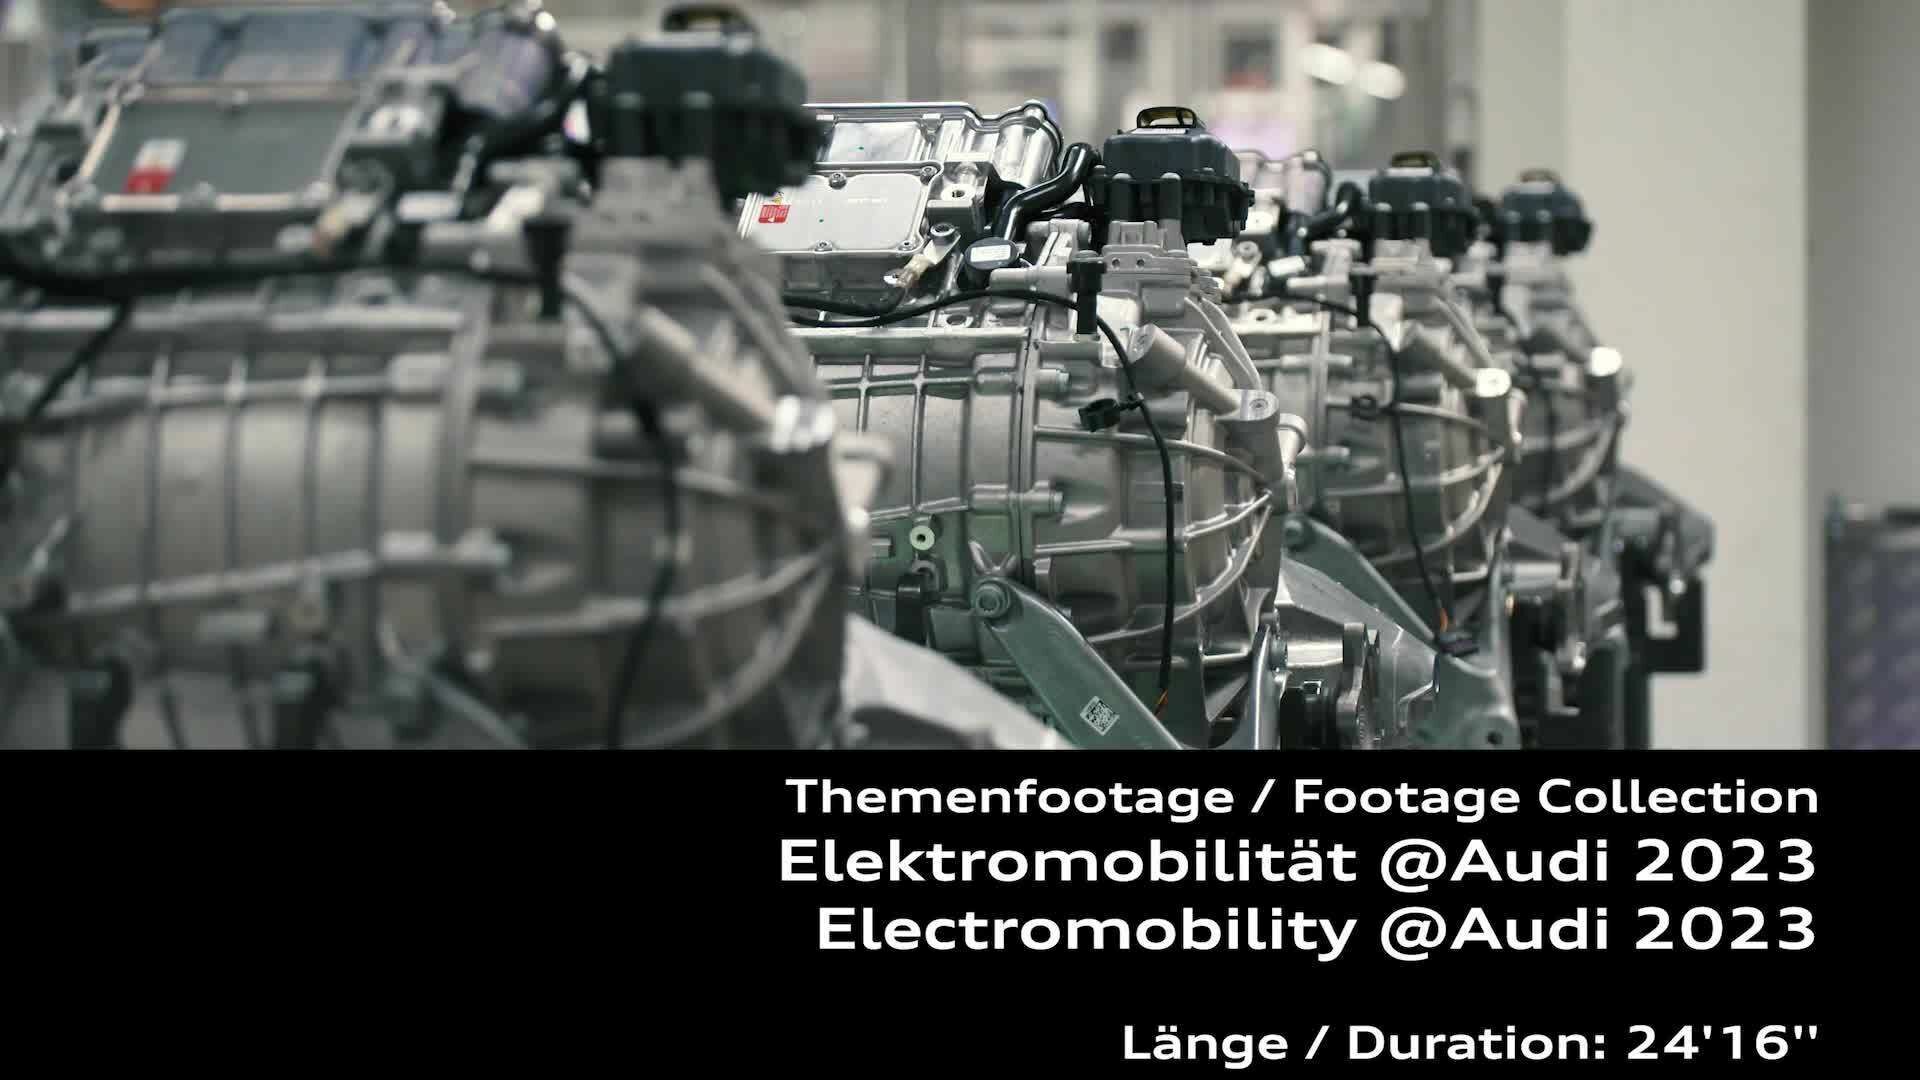 Footage: Electromobility @Audi 2023